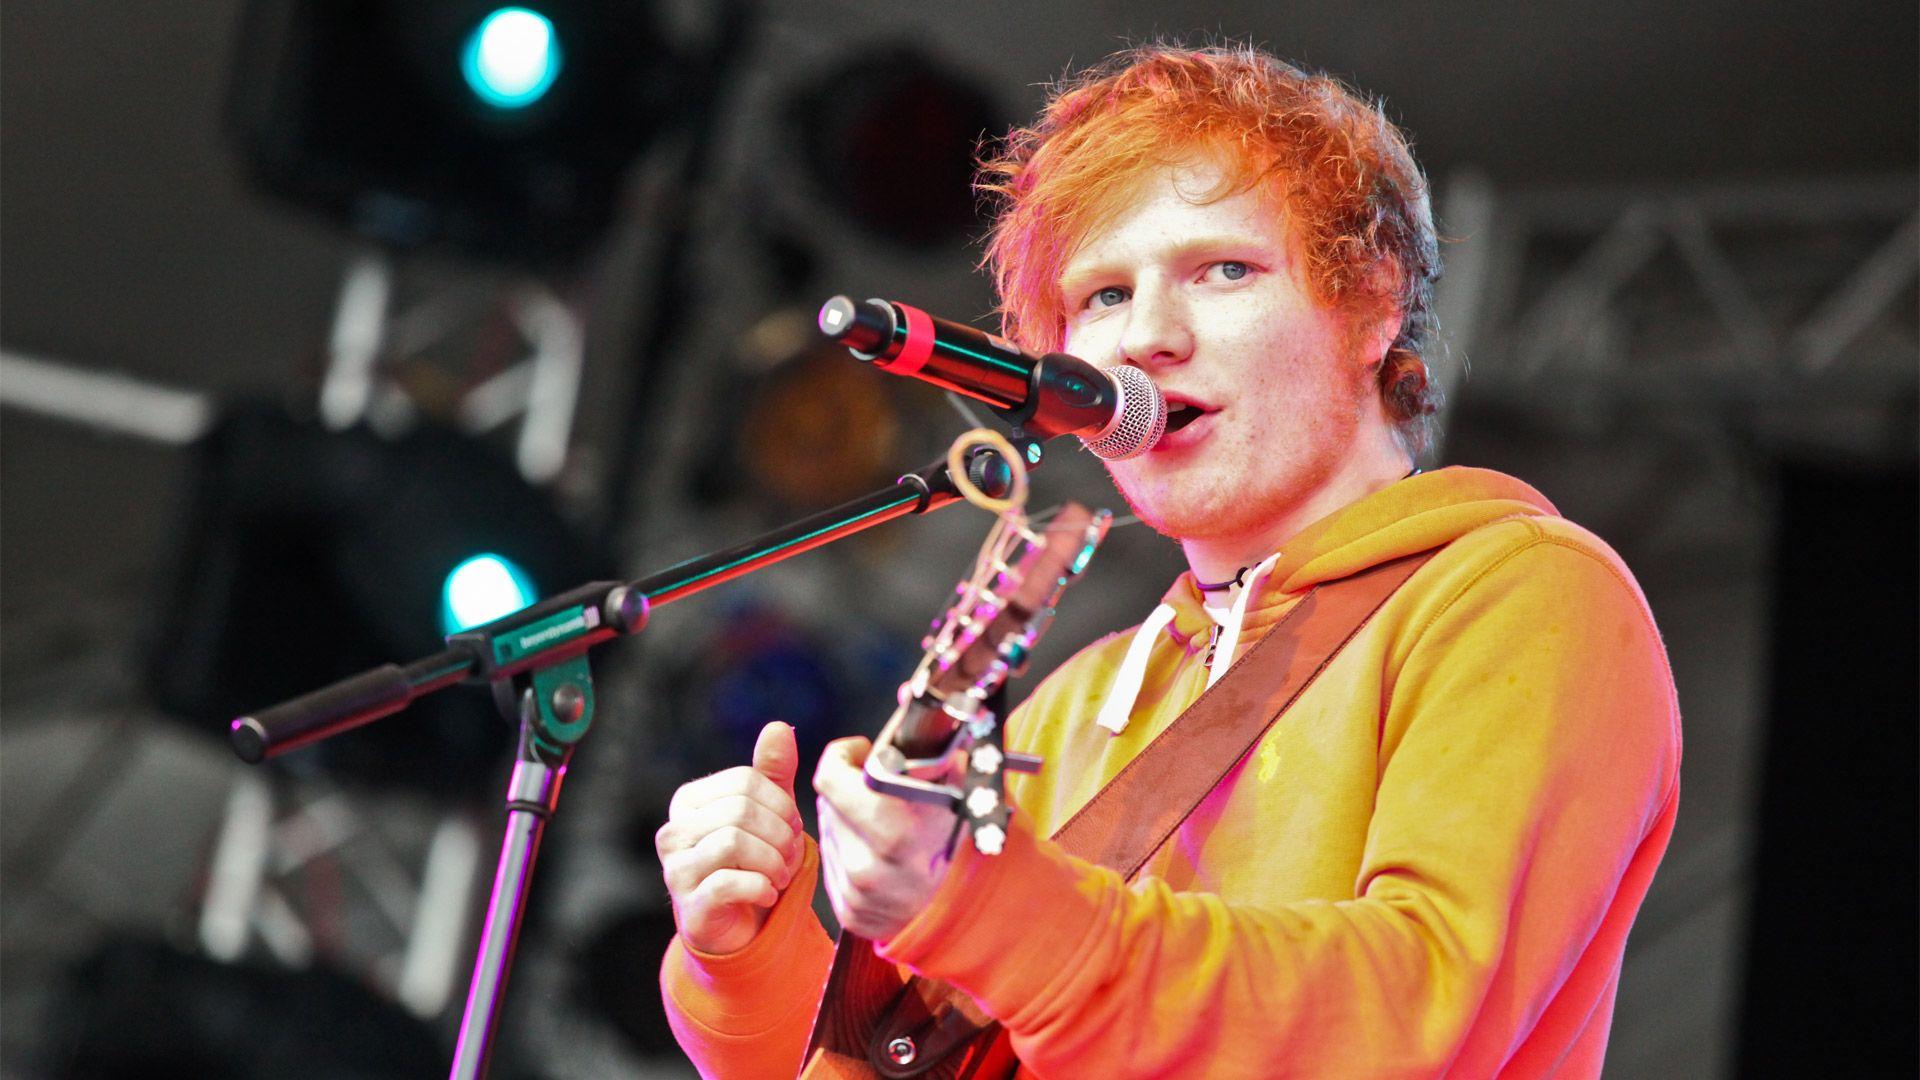 Ed Sheeran Performing Wallpaper 57053 1920x1080 px